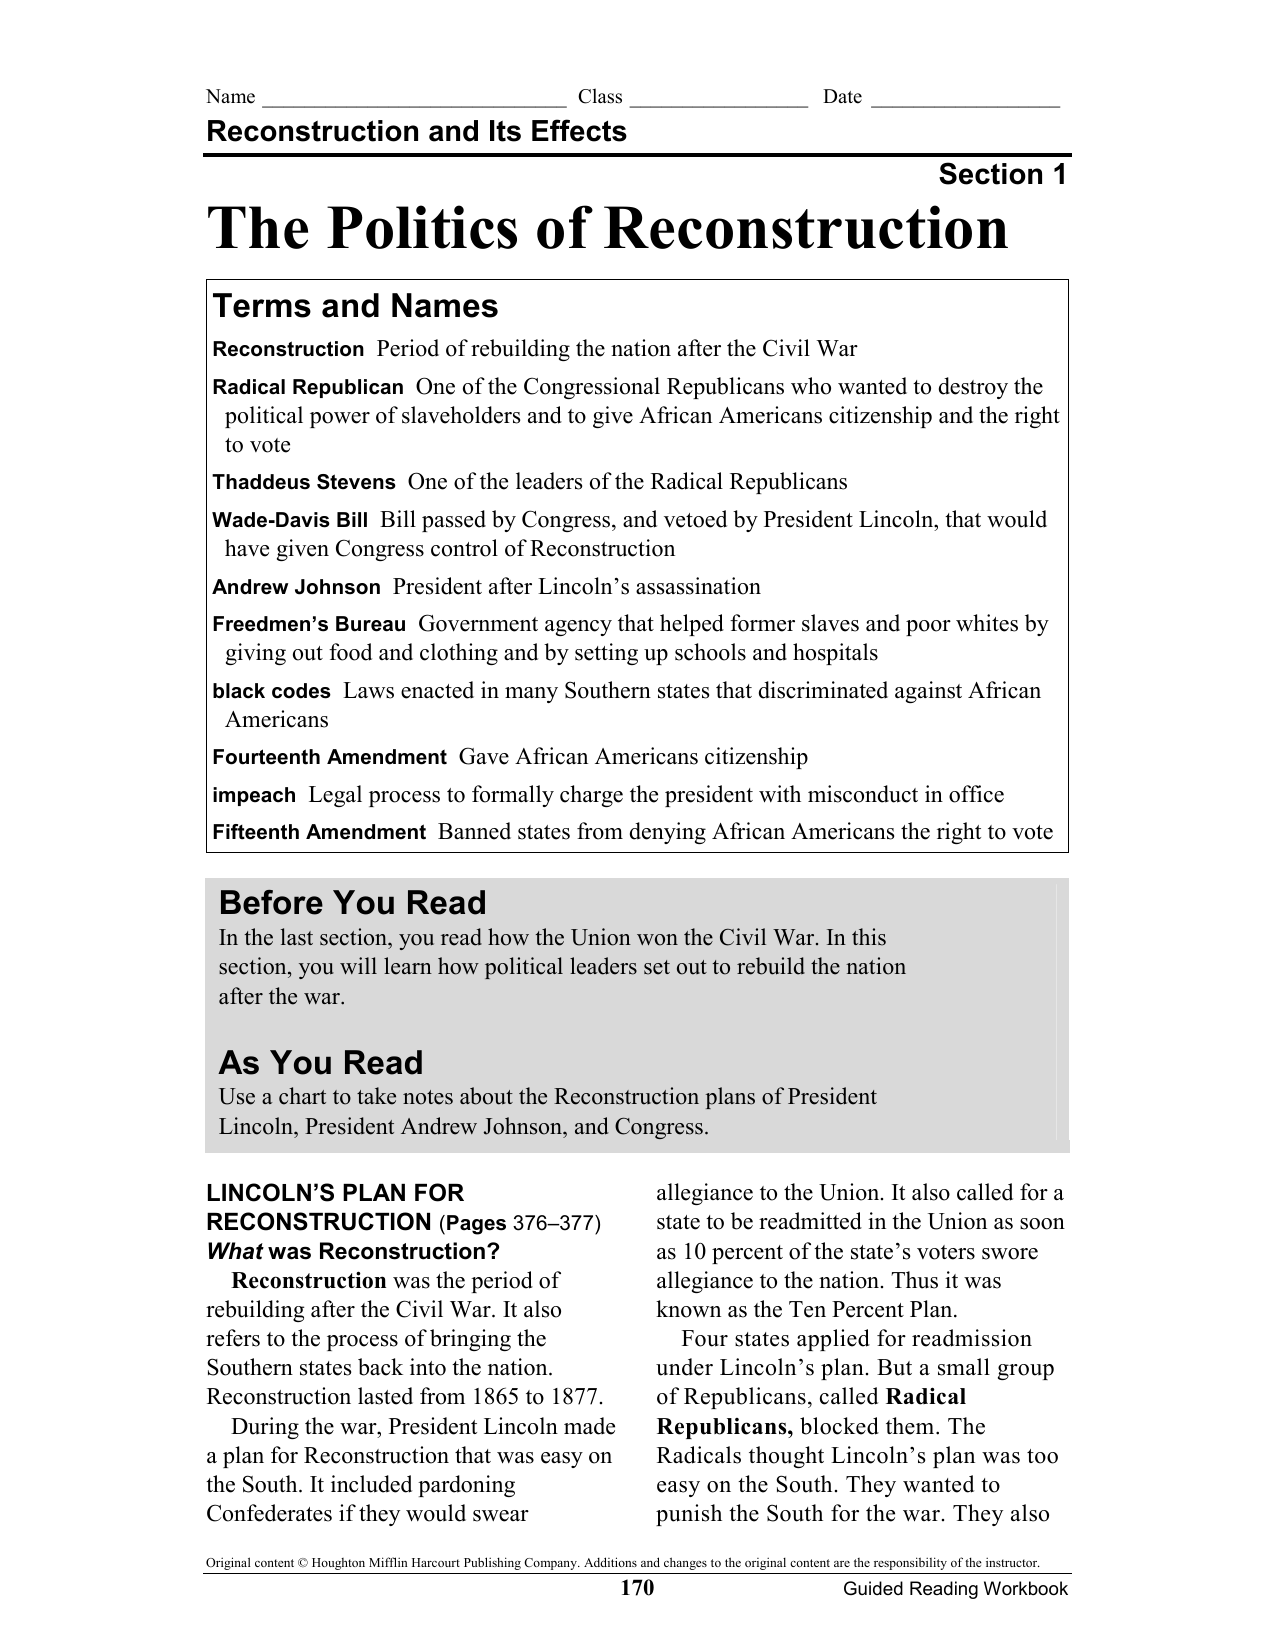 Reconstruction Plans Chart